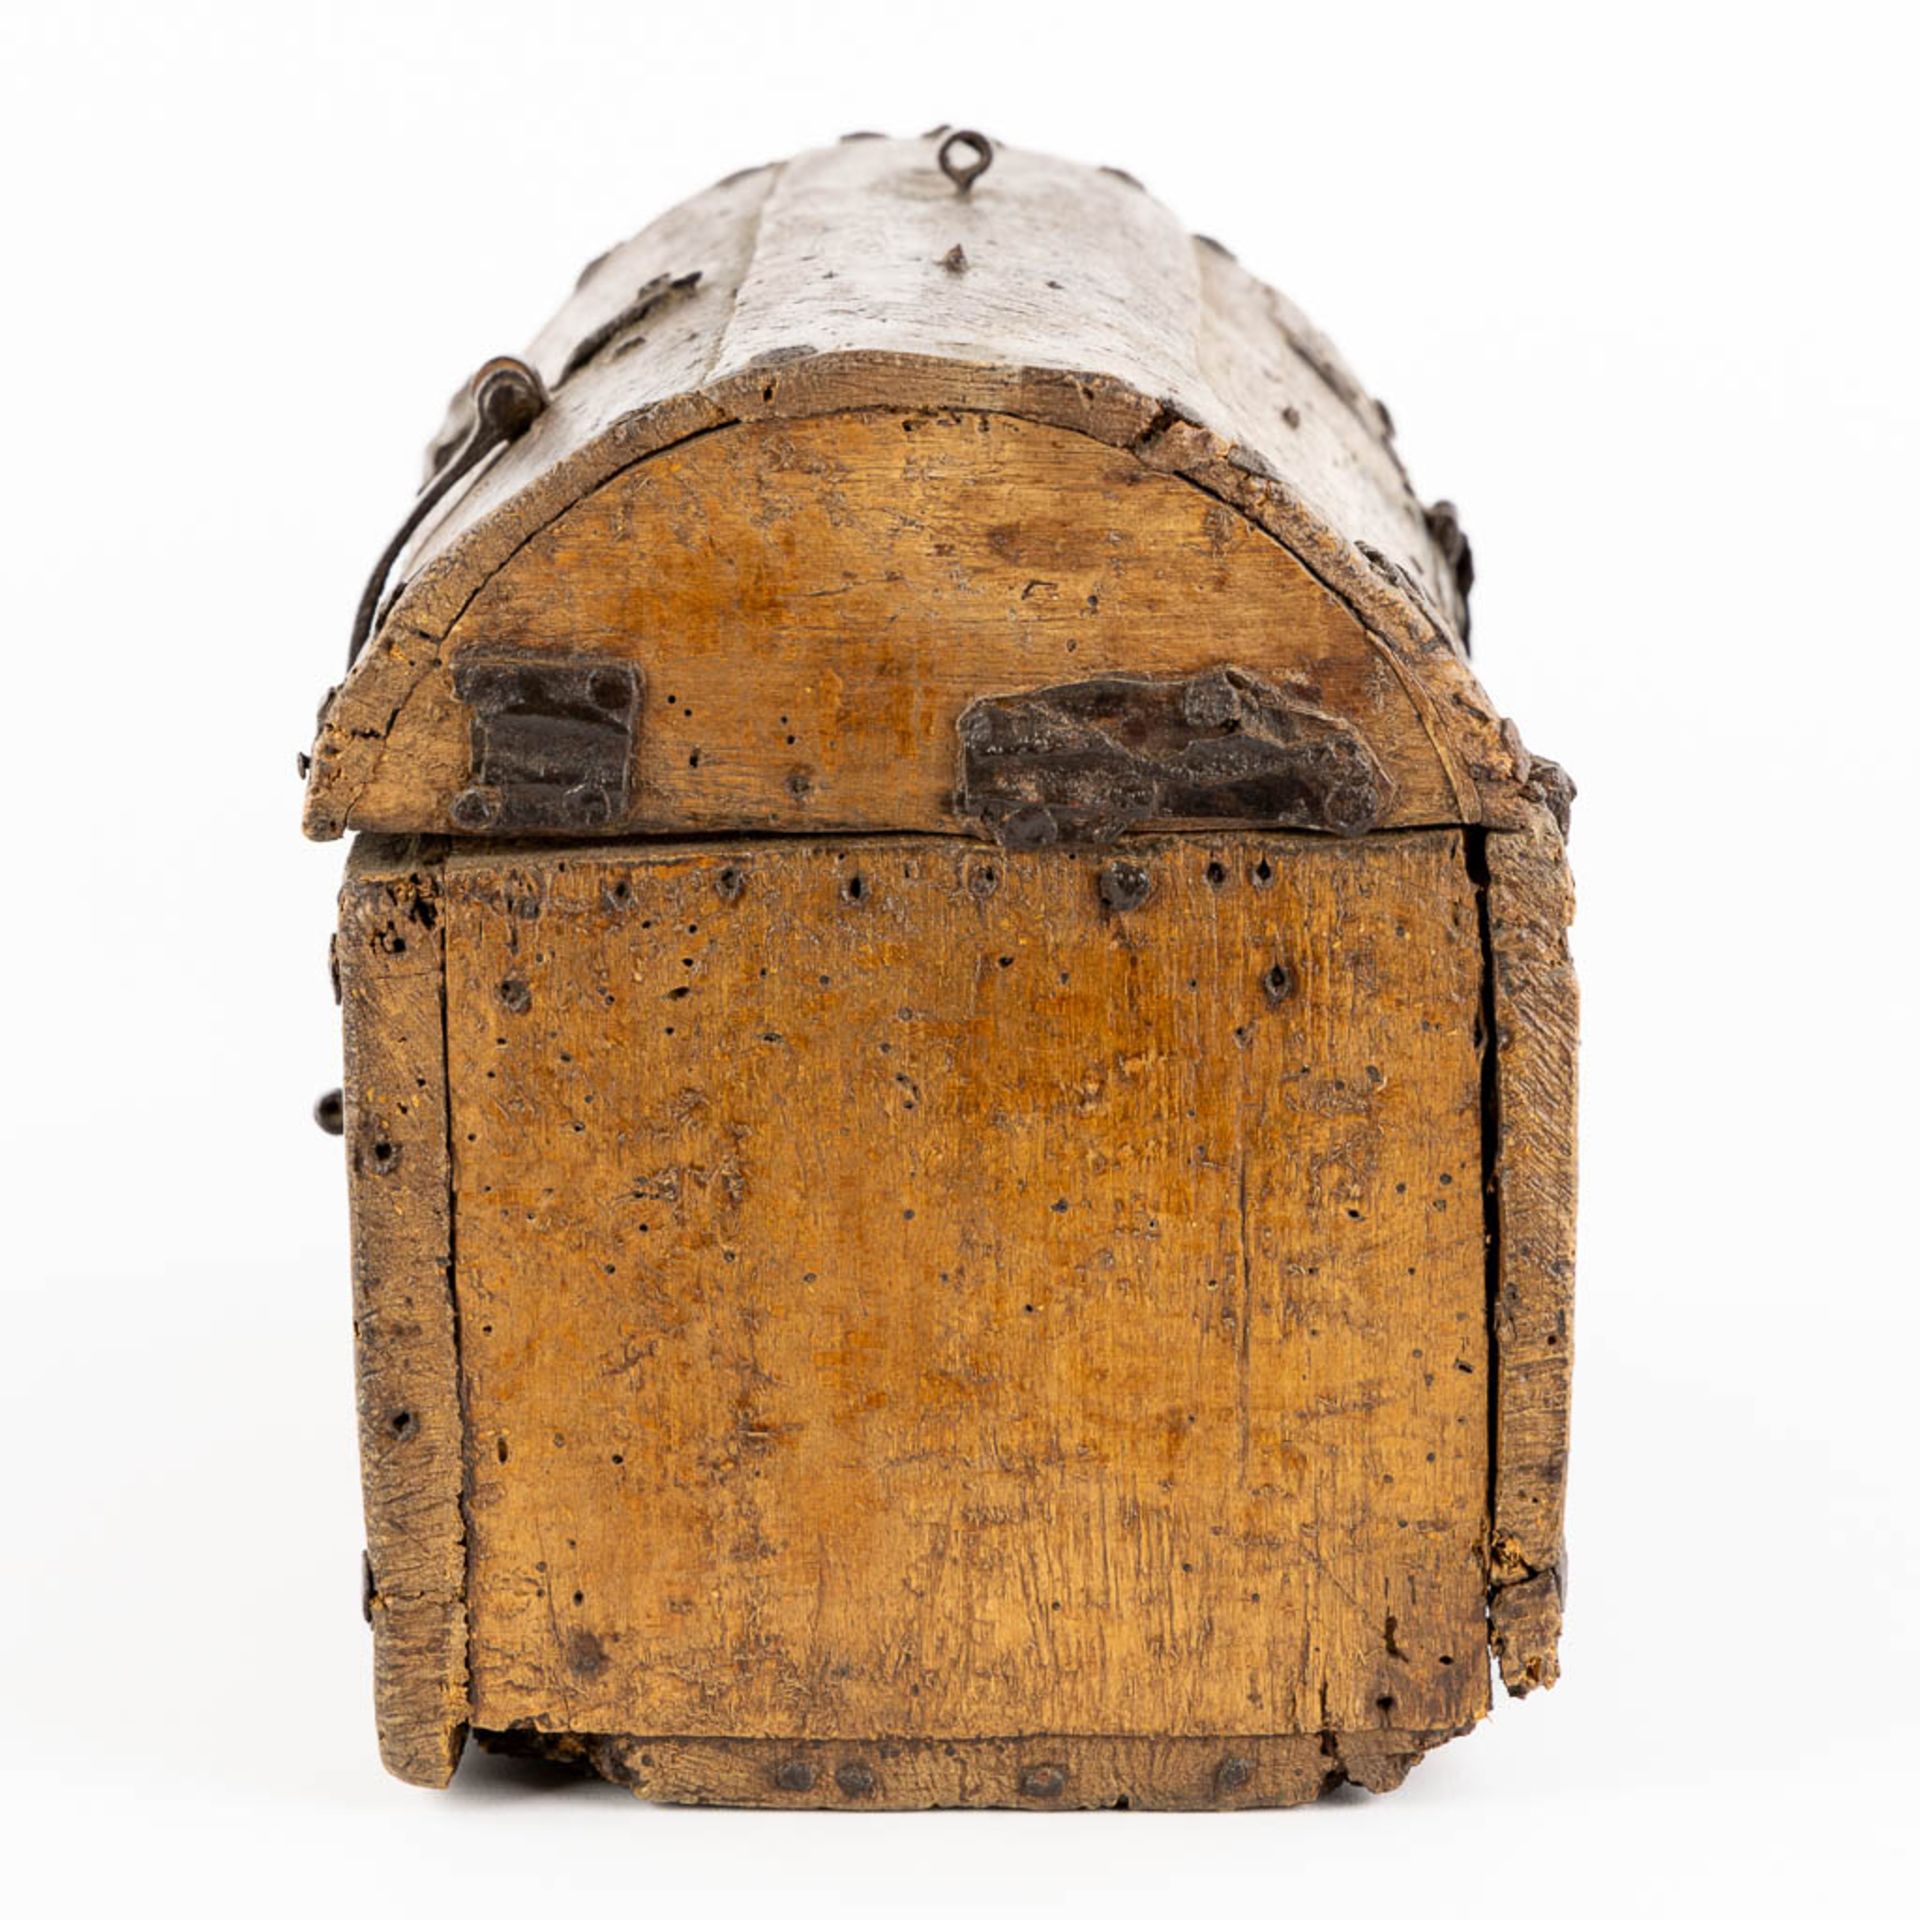 An antique money box or storage chest, wood and wrought iron, 16th/17th C. (L:20 x W:36 x H:22 cm) - Bild 4 aus 14